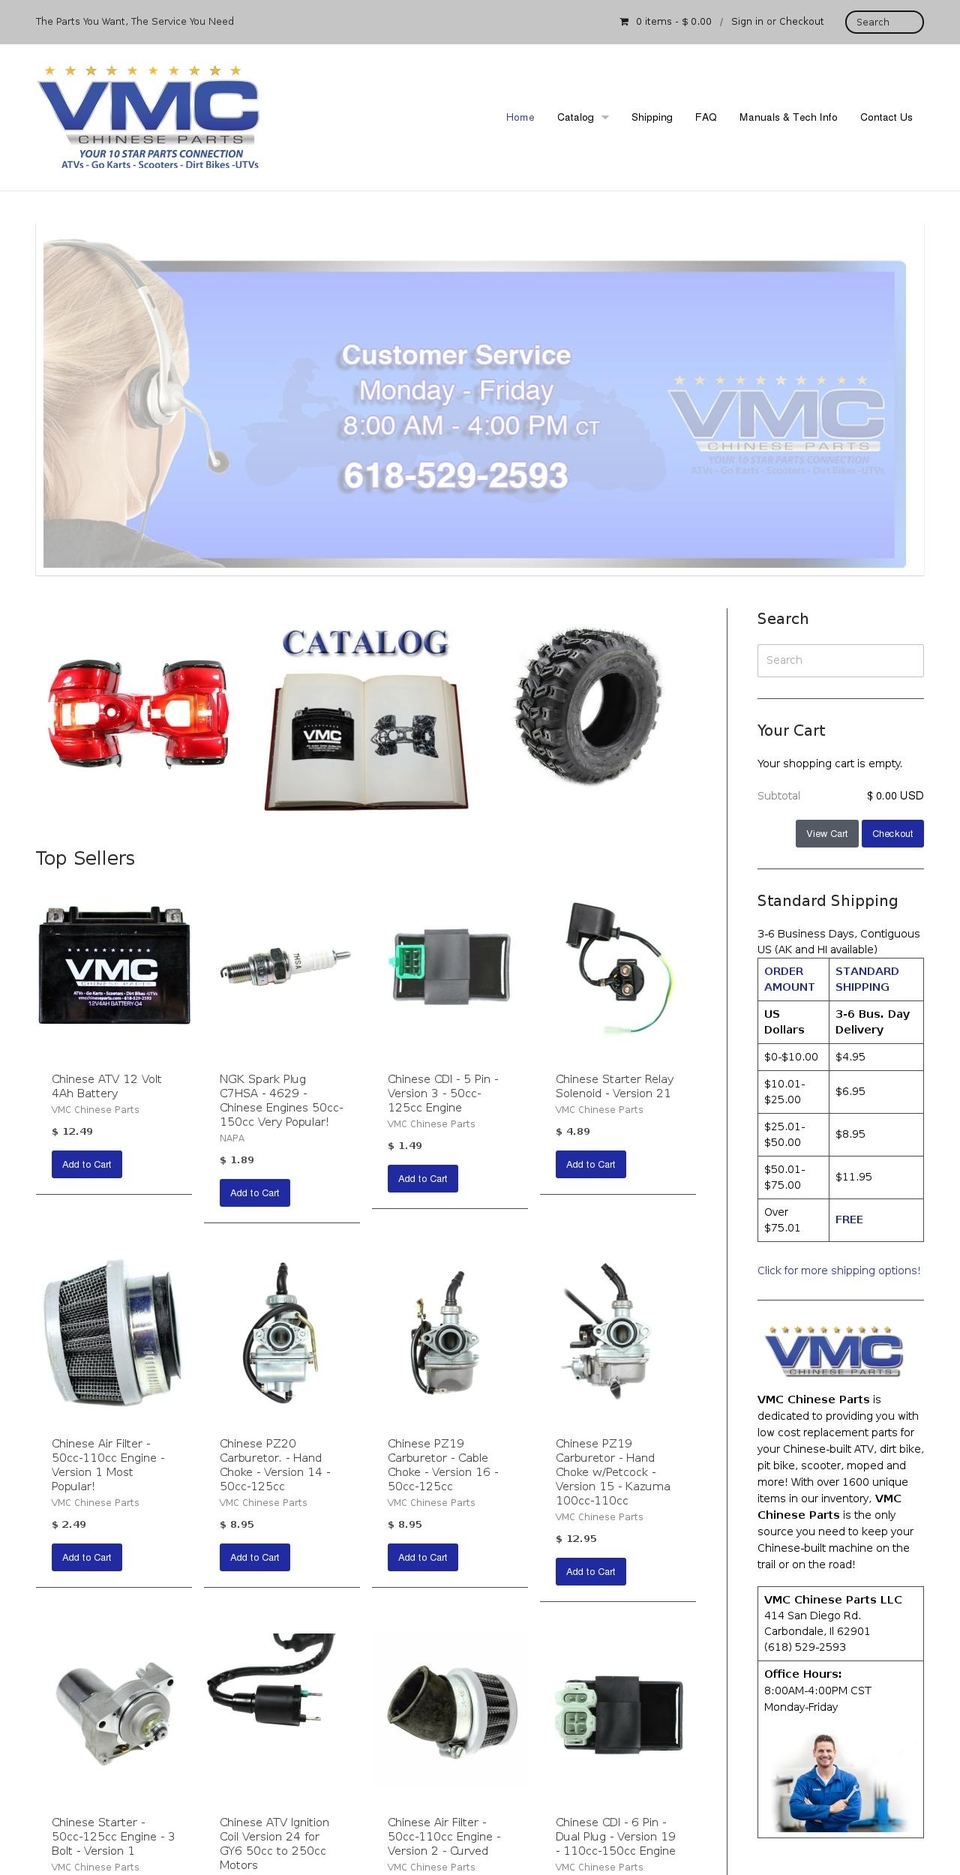 vmcchineseparts.com shopify website screenshot